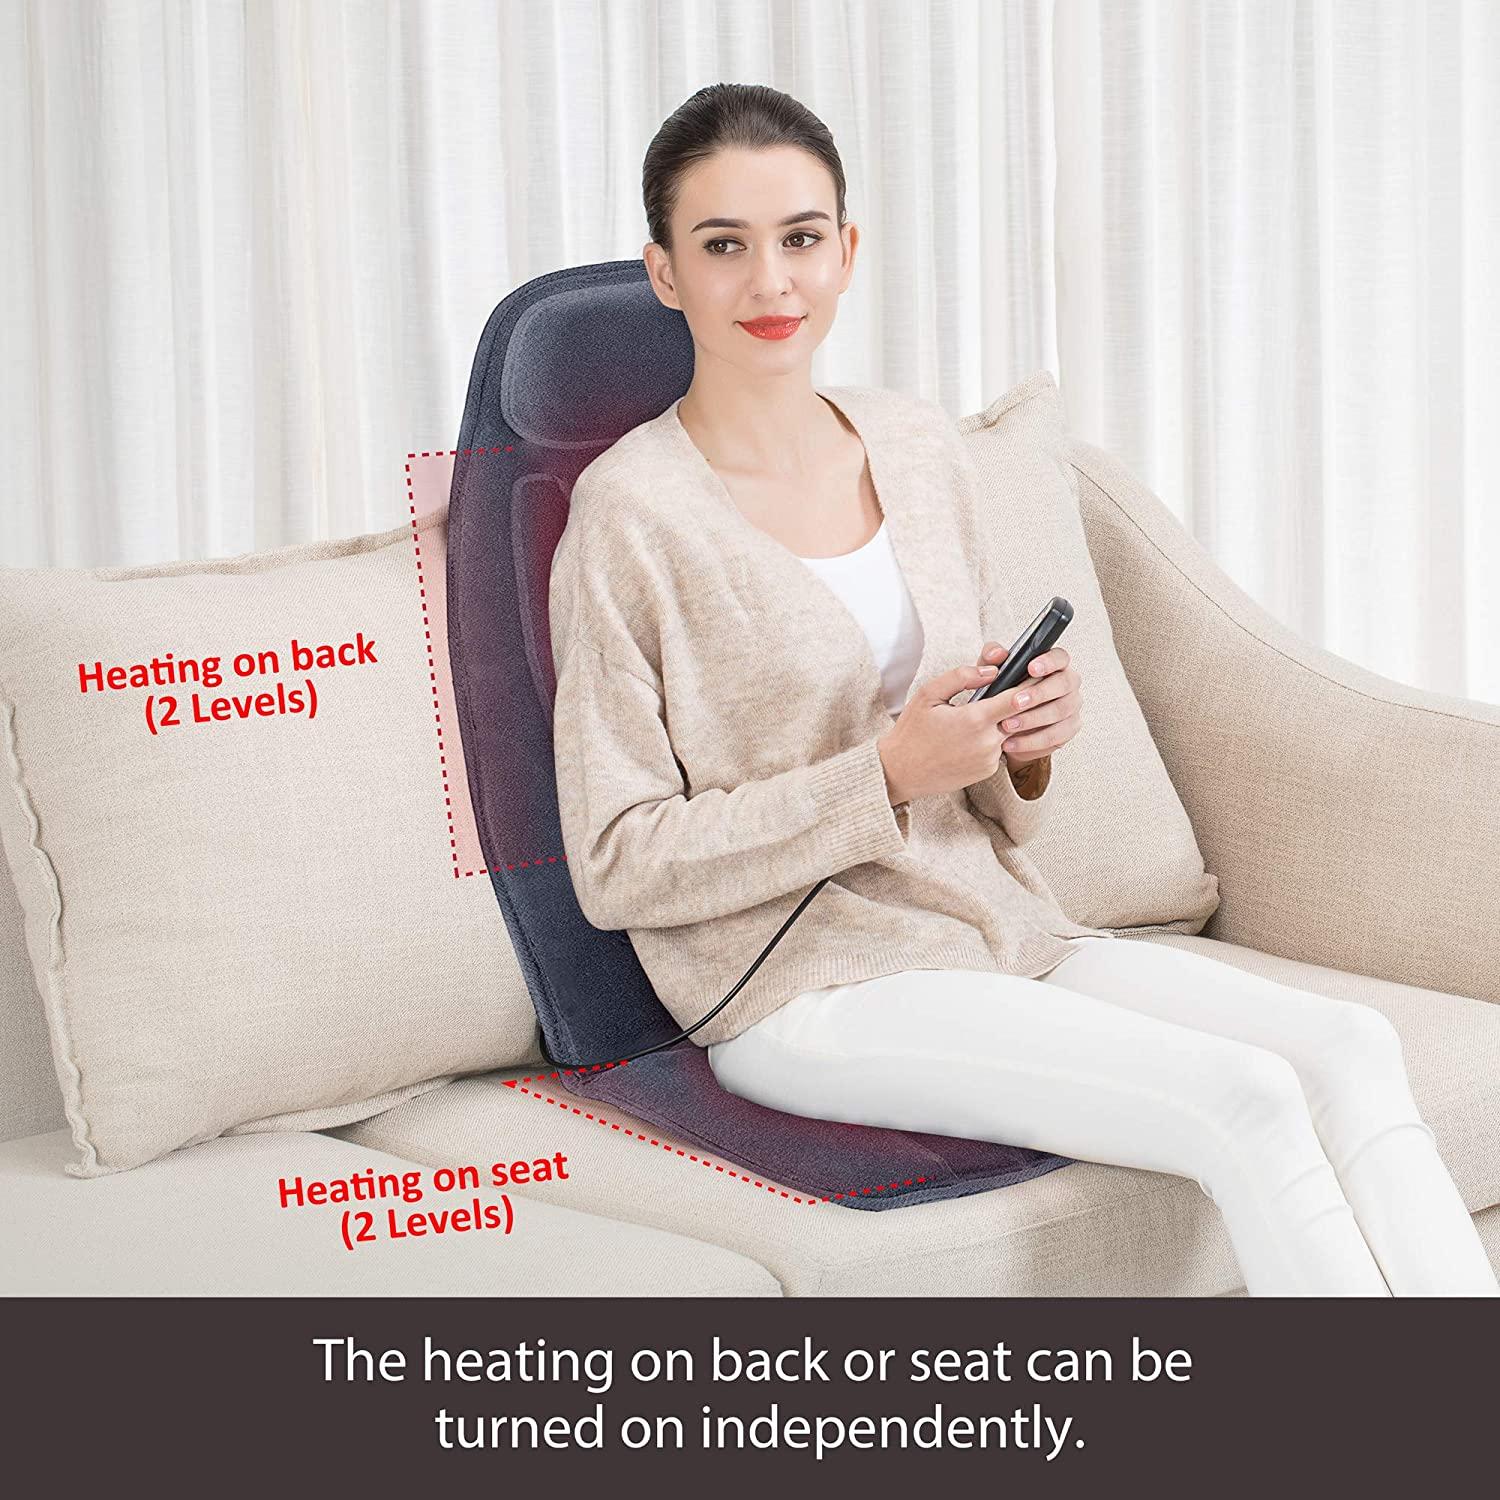 8 Mode Massage Car Seat Cushion Back Relief Fatigue Heat Office